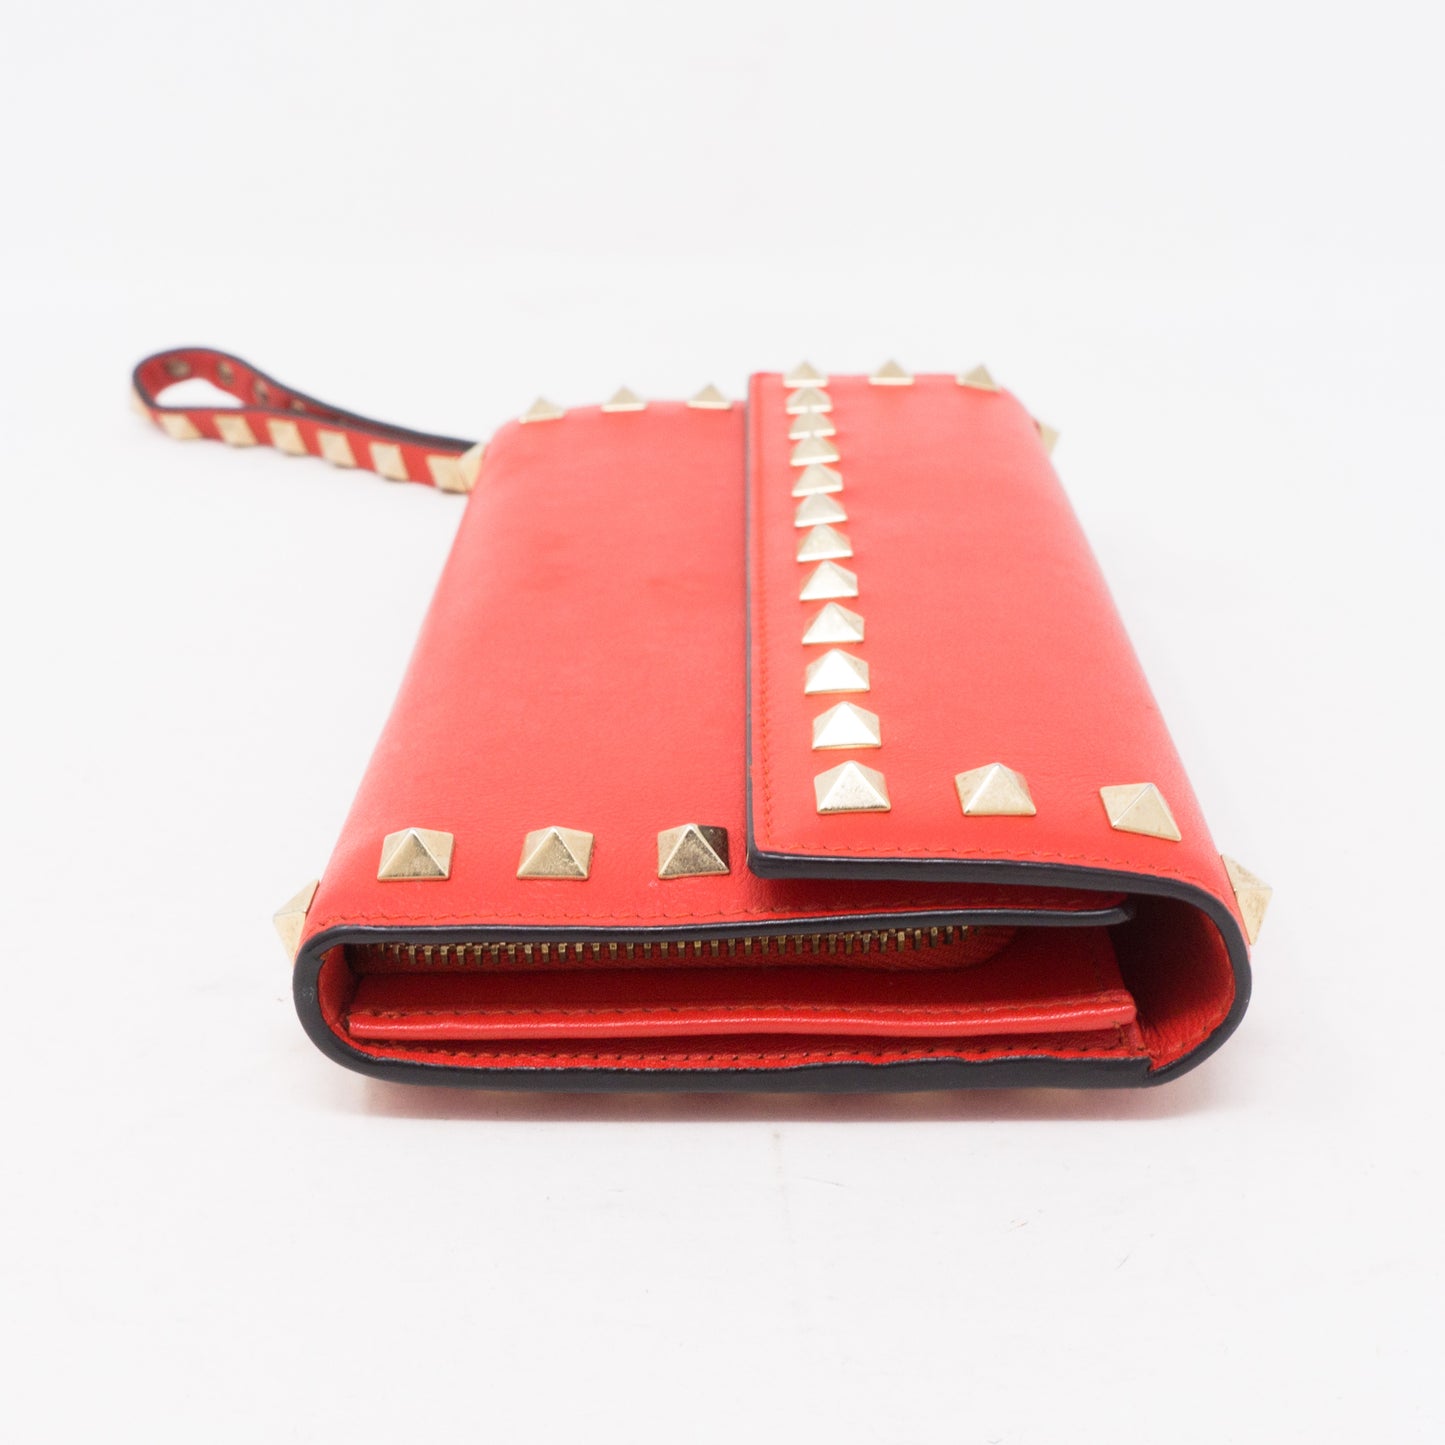 Rockstud Red Leather Wallet